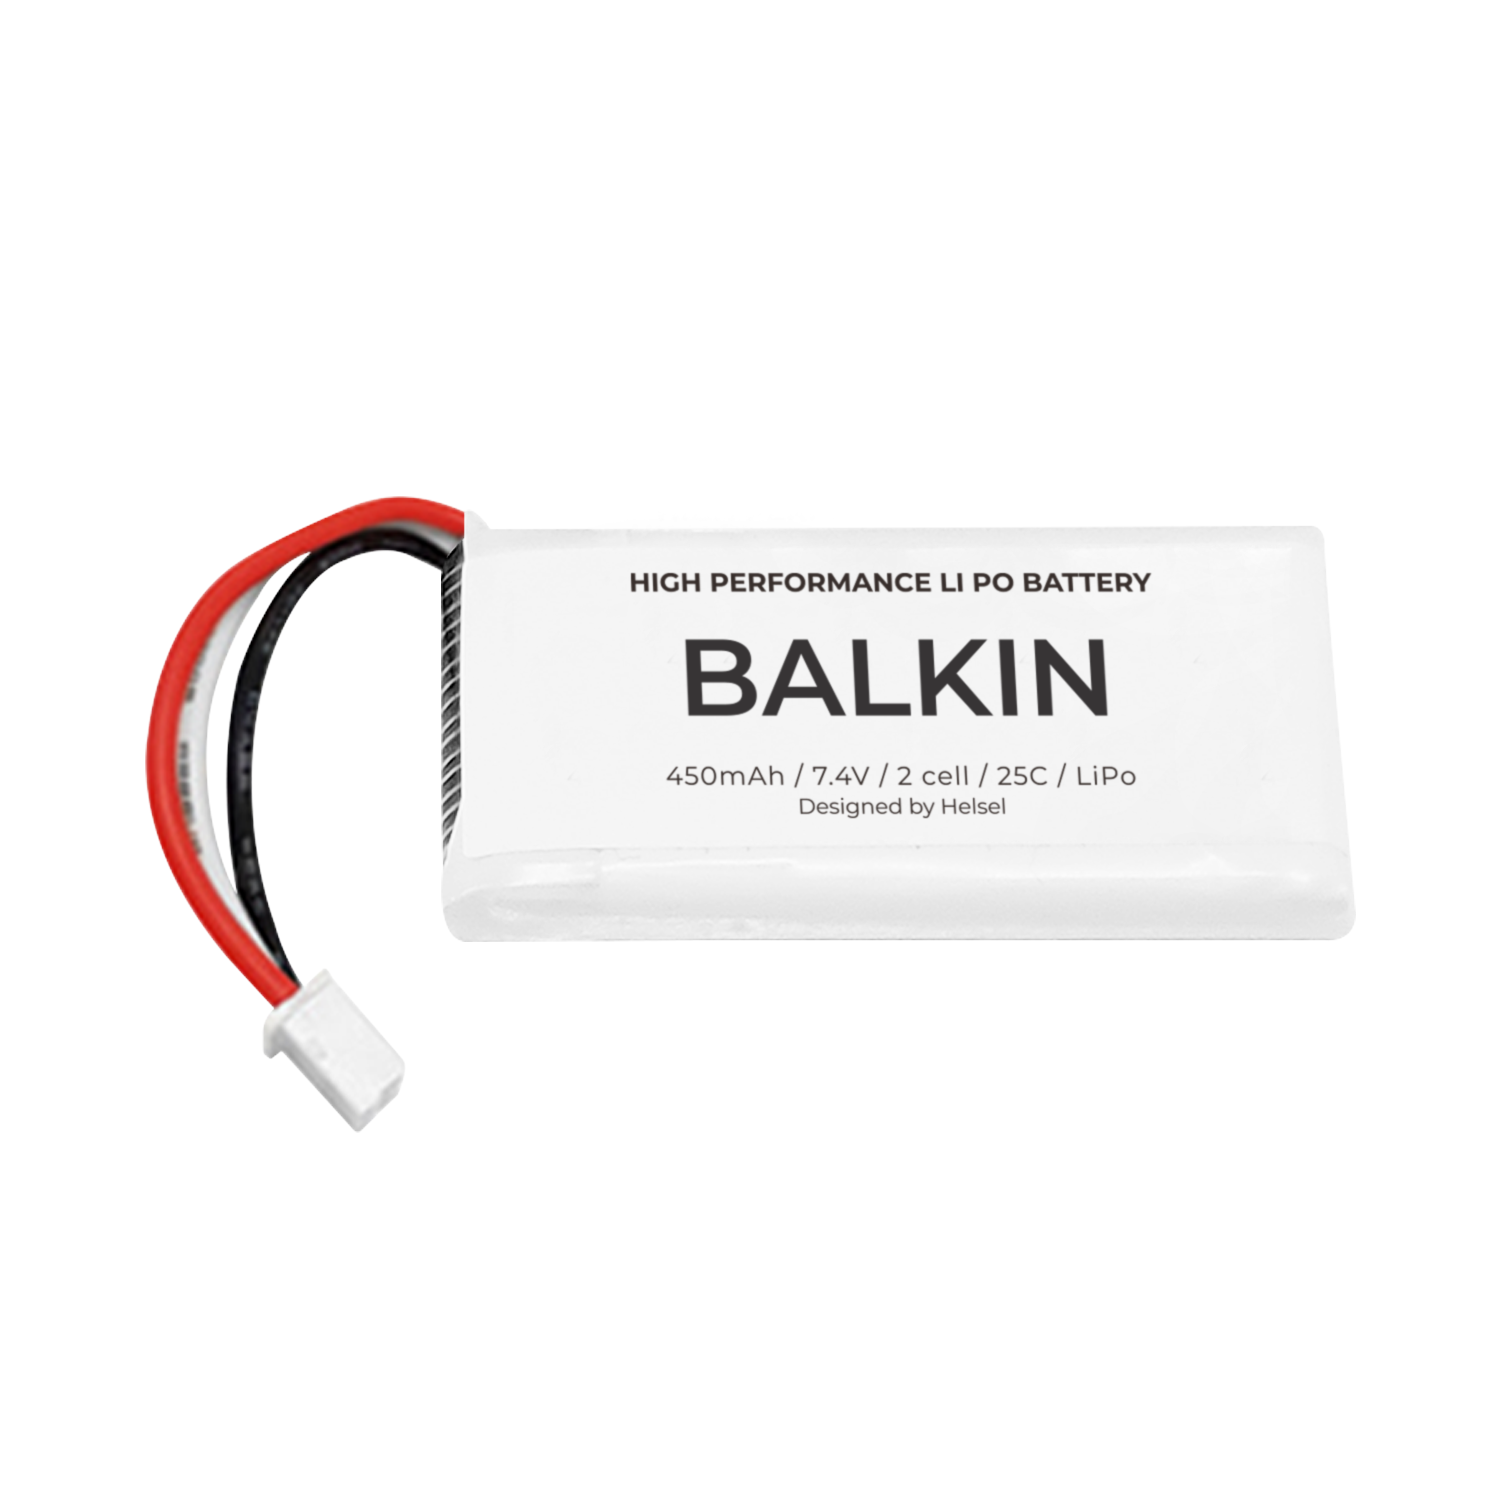 BALKIN 450mAh 2S lipo battery